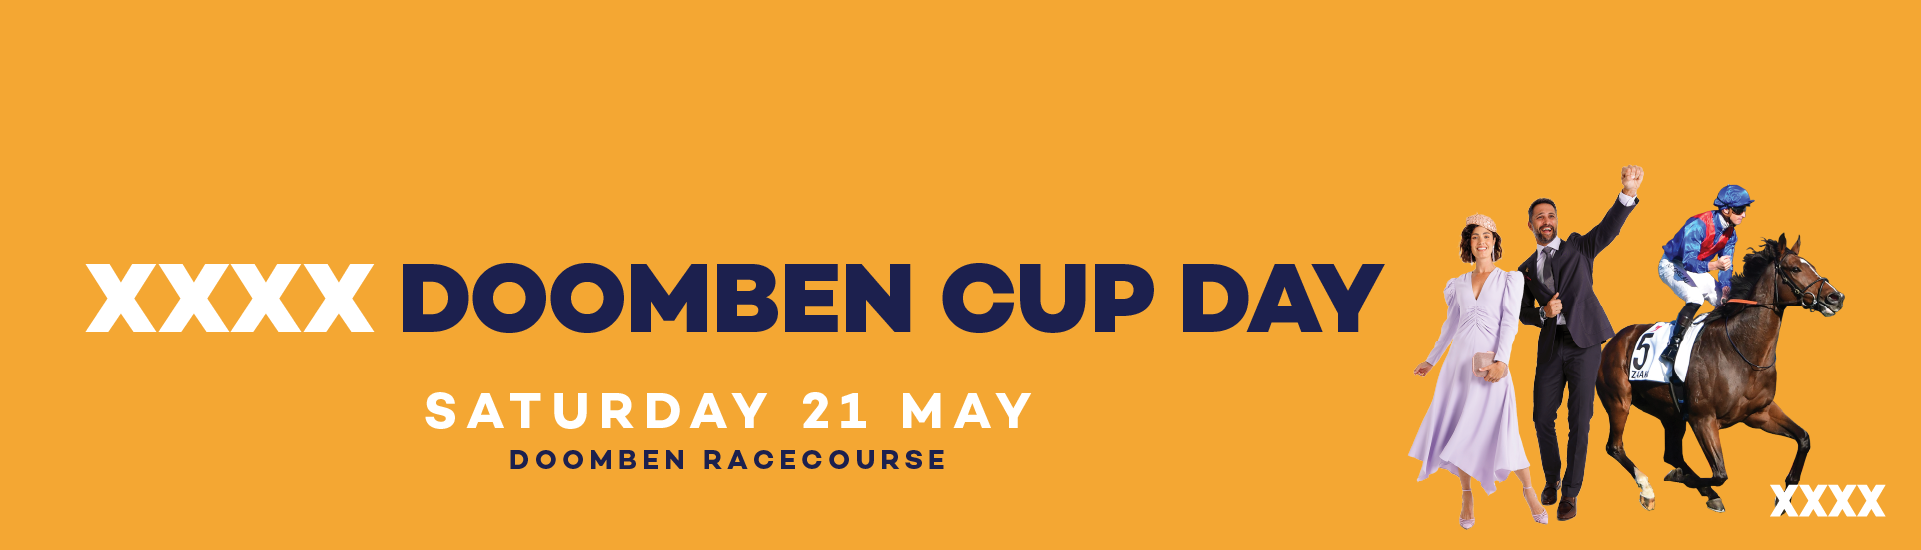 03_DoombenCup_Web banner 1920x550 imageless2 | Brisbane Racing Club